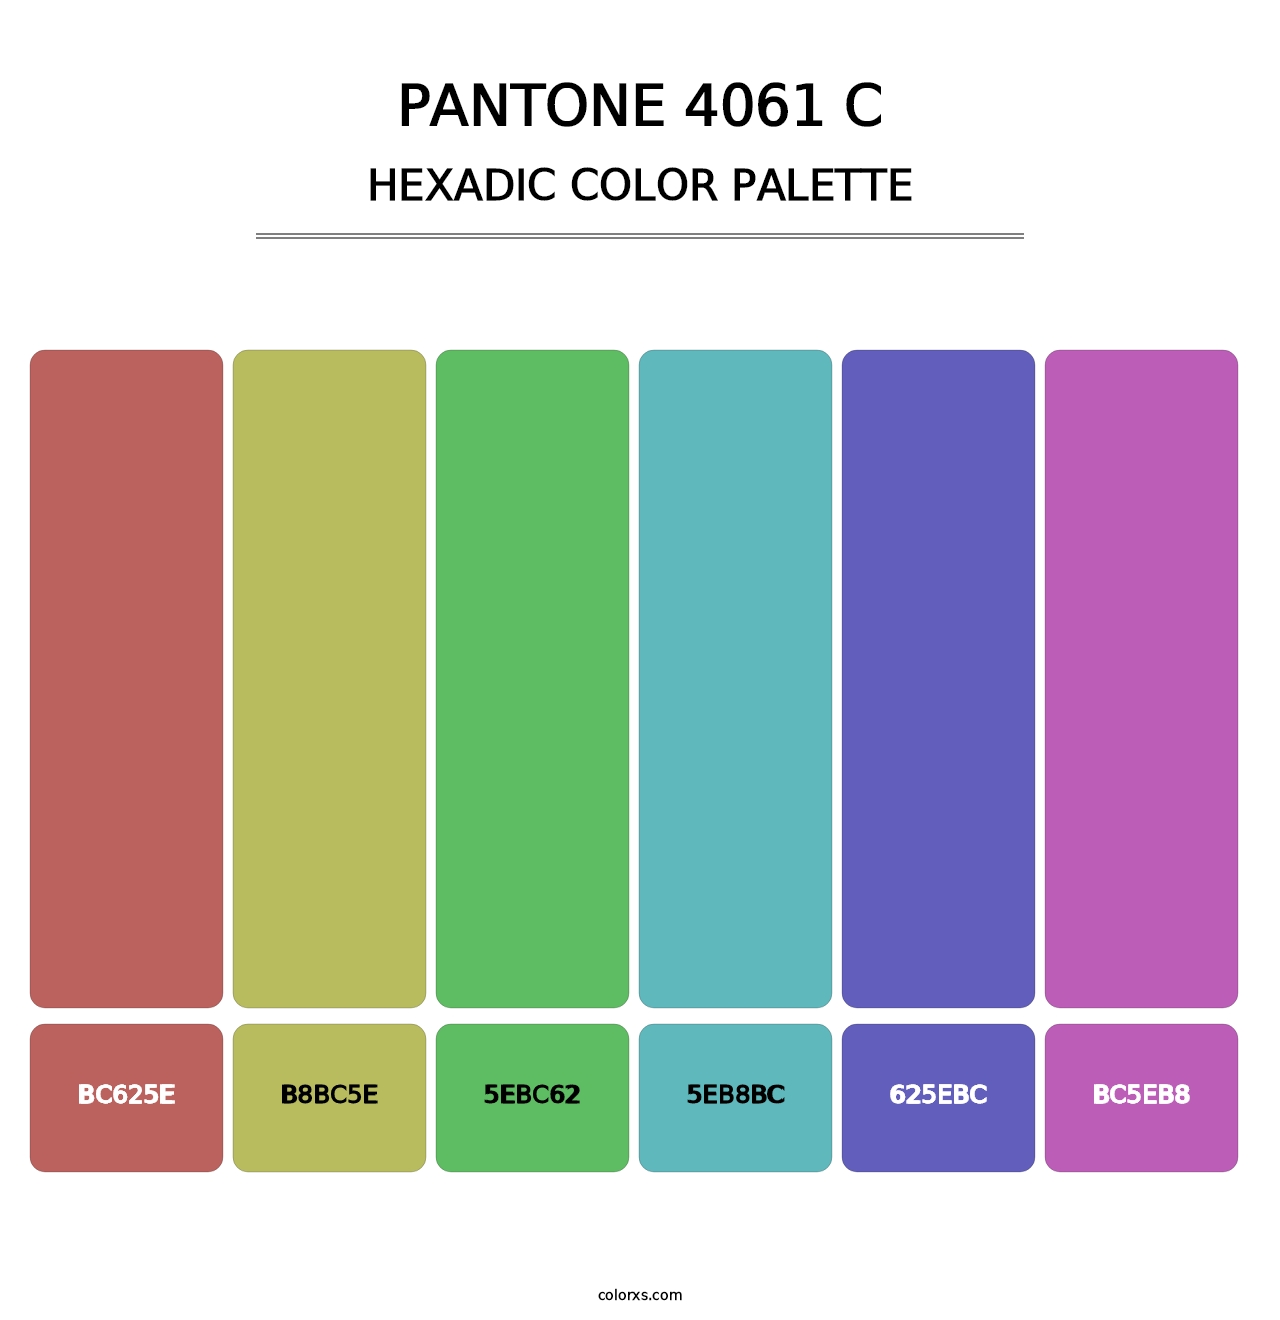 PANTONE 4061 C - Hexadic Color Palette